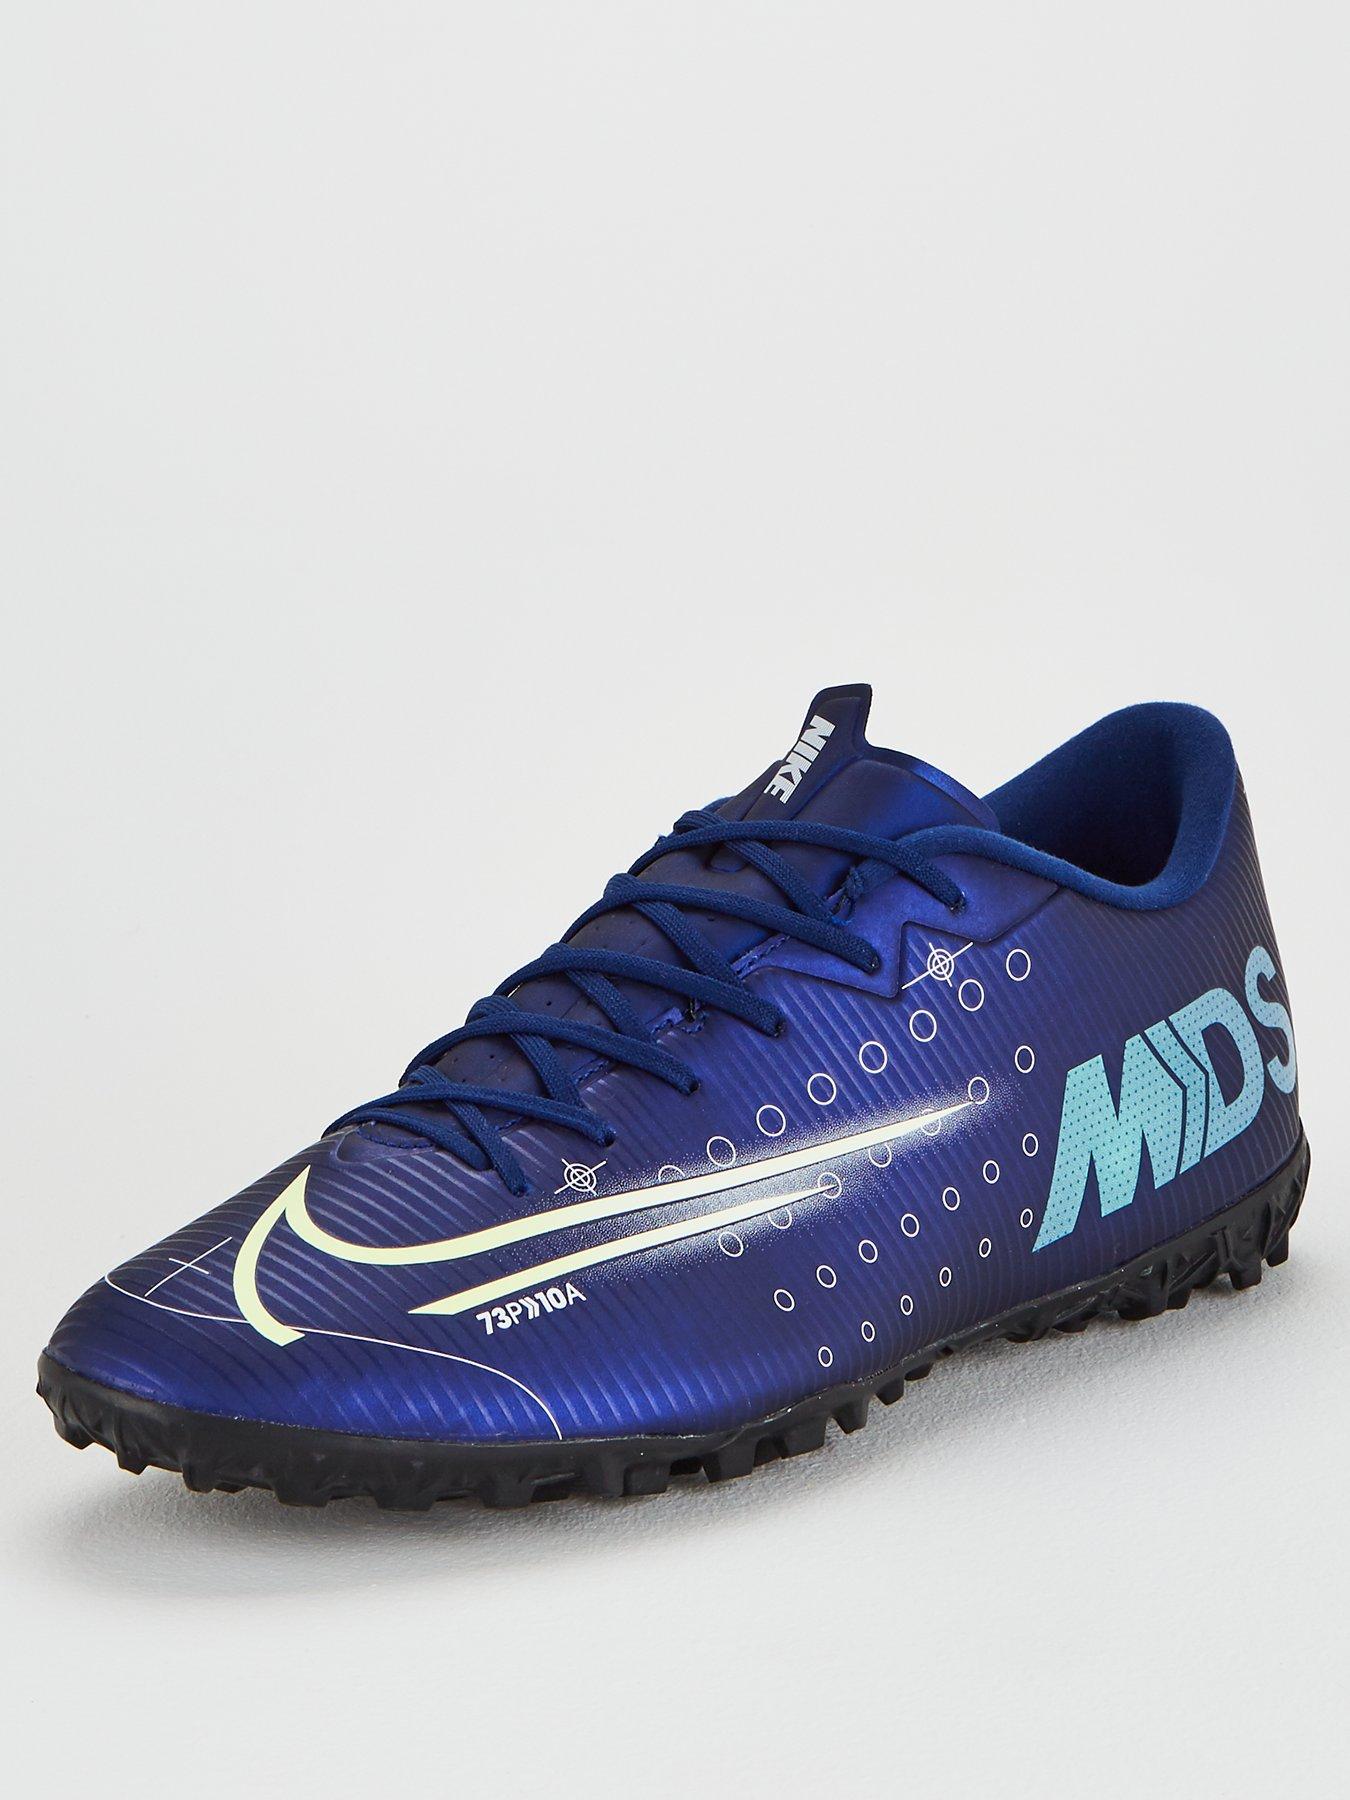 Nike mercurial vapor 13 elite fg tech craft soccerpro